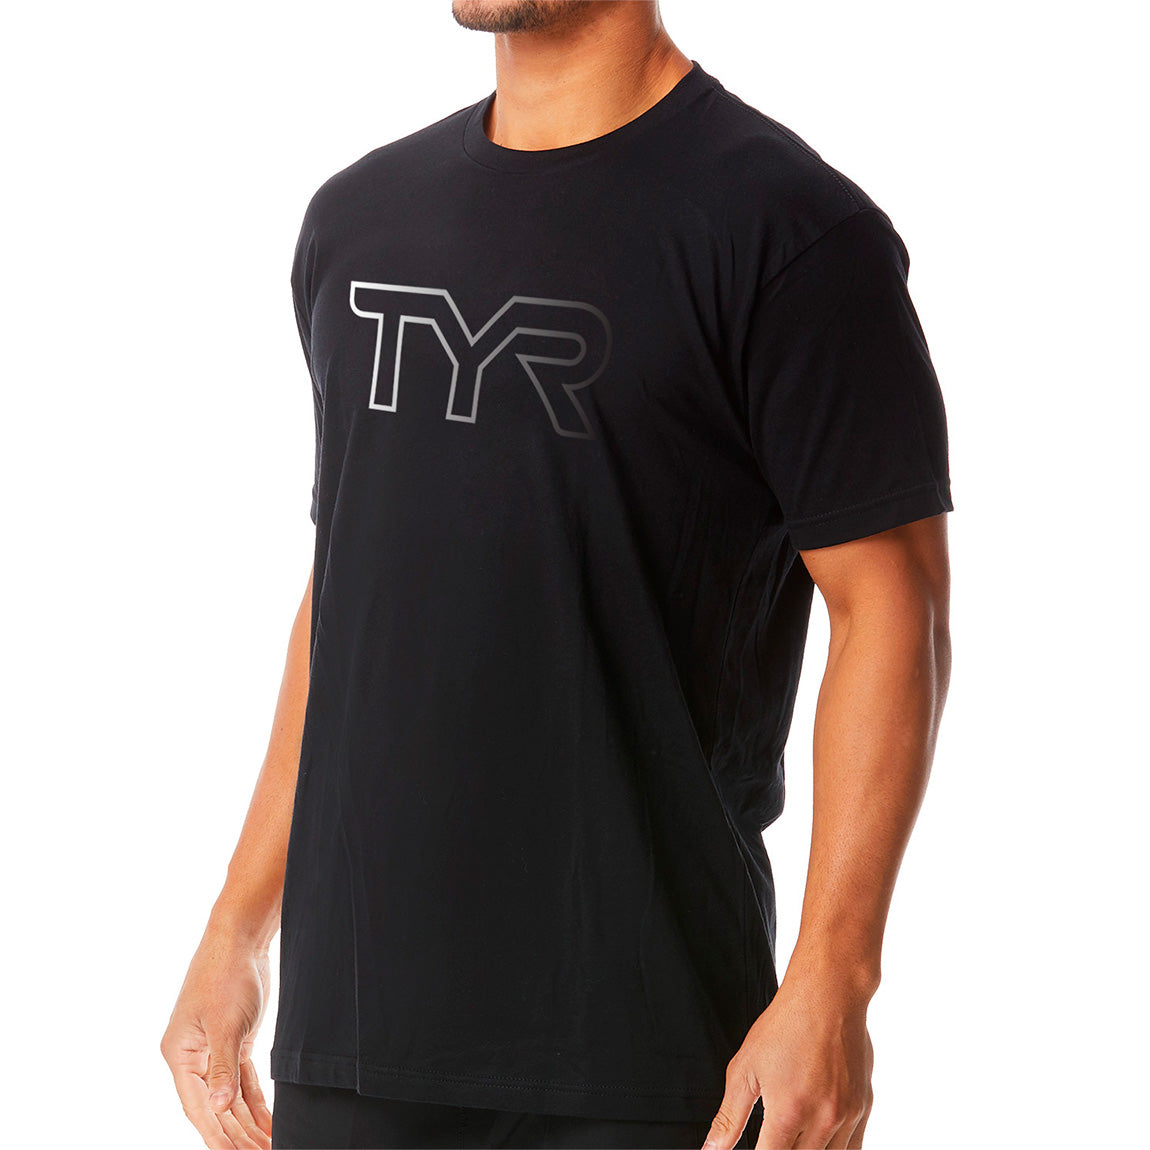 Camiseta TYR Masculina